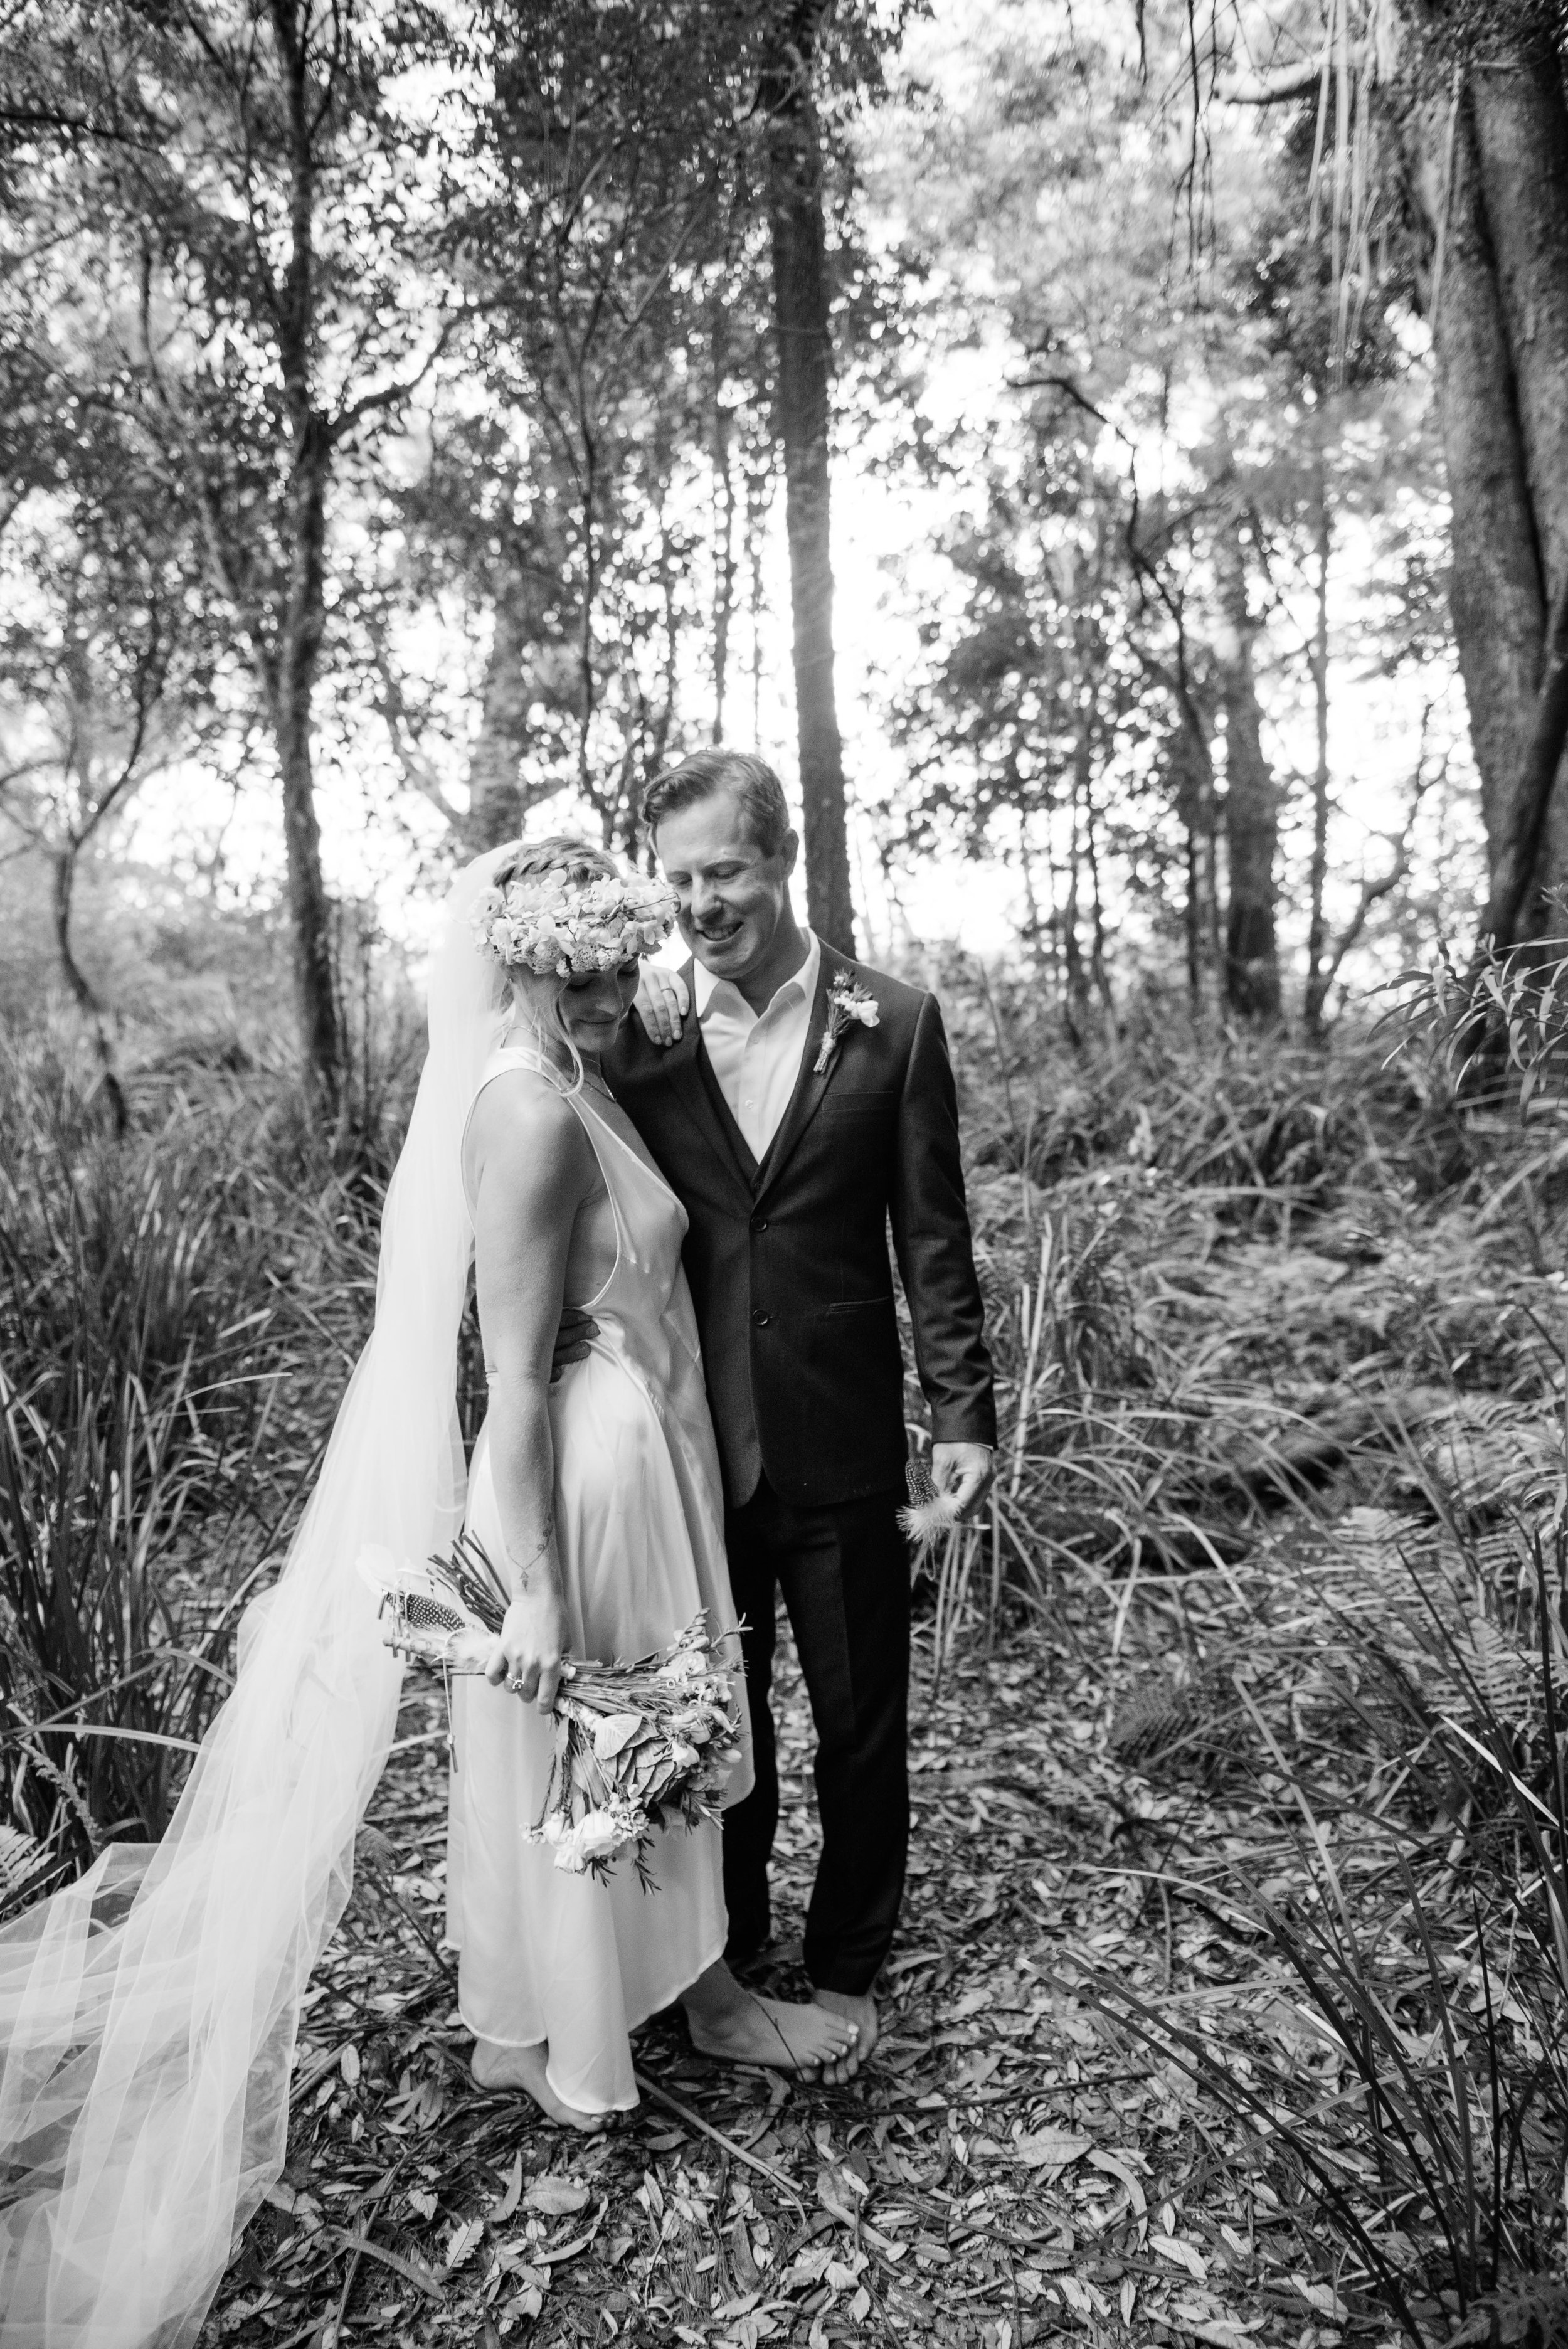 Carla and Luke- wedding photographer, byron bay wedding and family photographer, tweed heads wedding and family photography-332.jpg